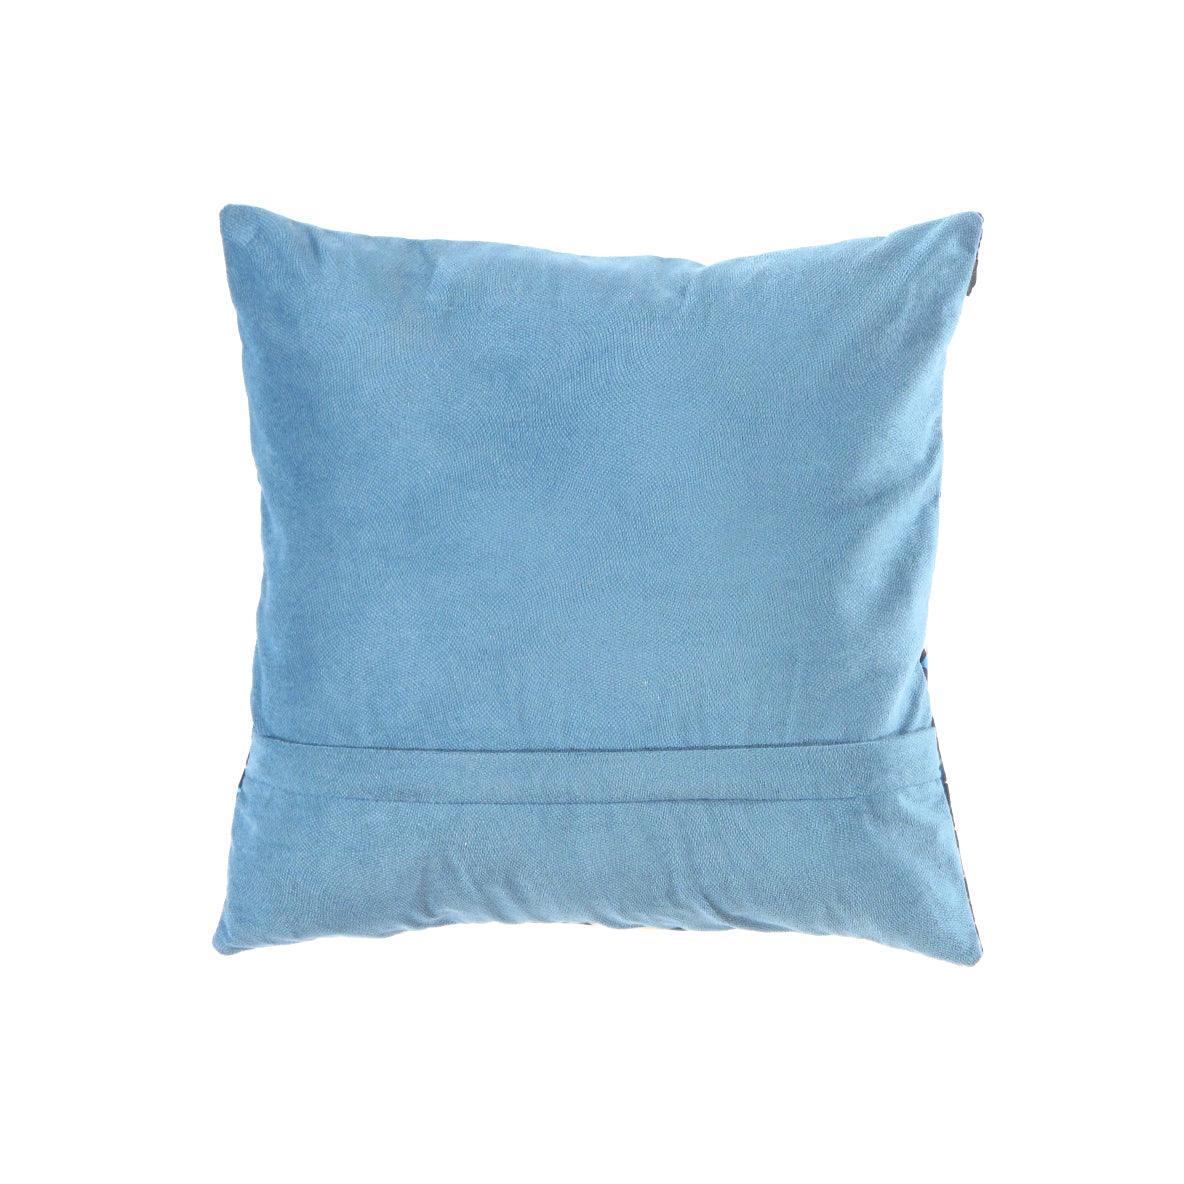 Canvello Silkroad Tile Velvet Pillow 16' X 16' - Canvello